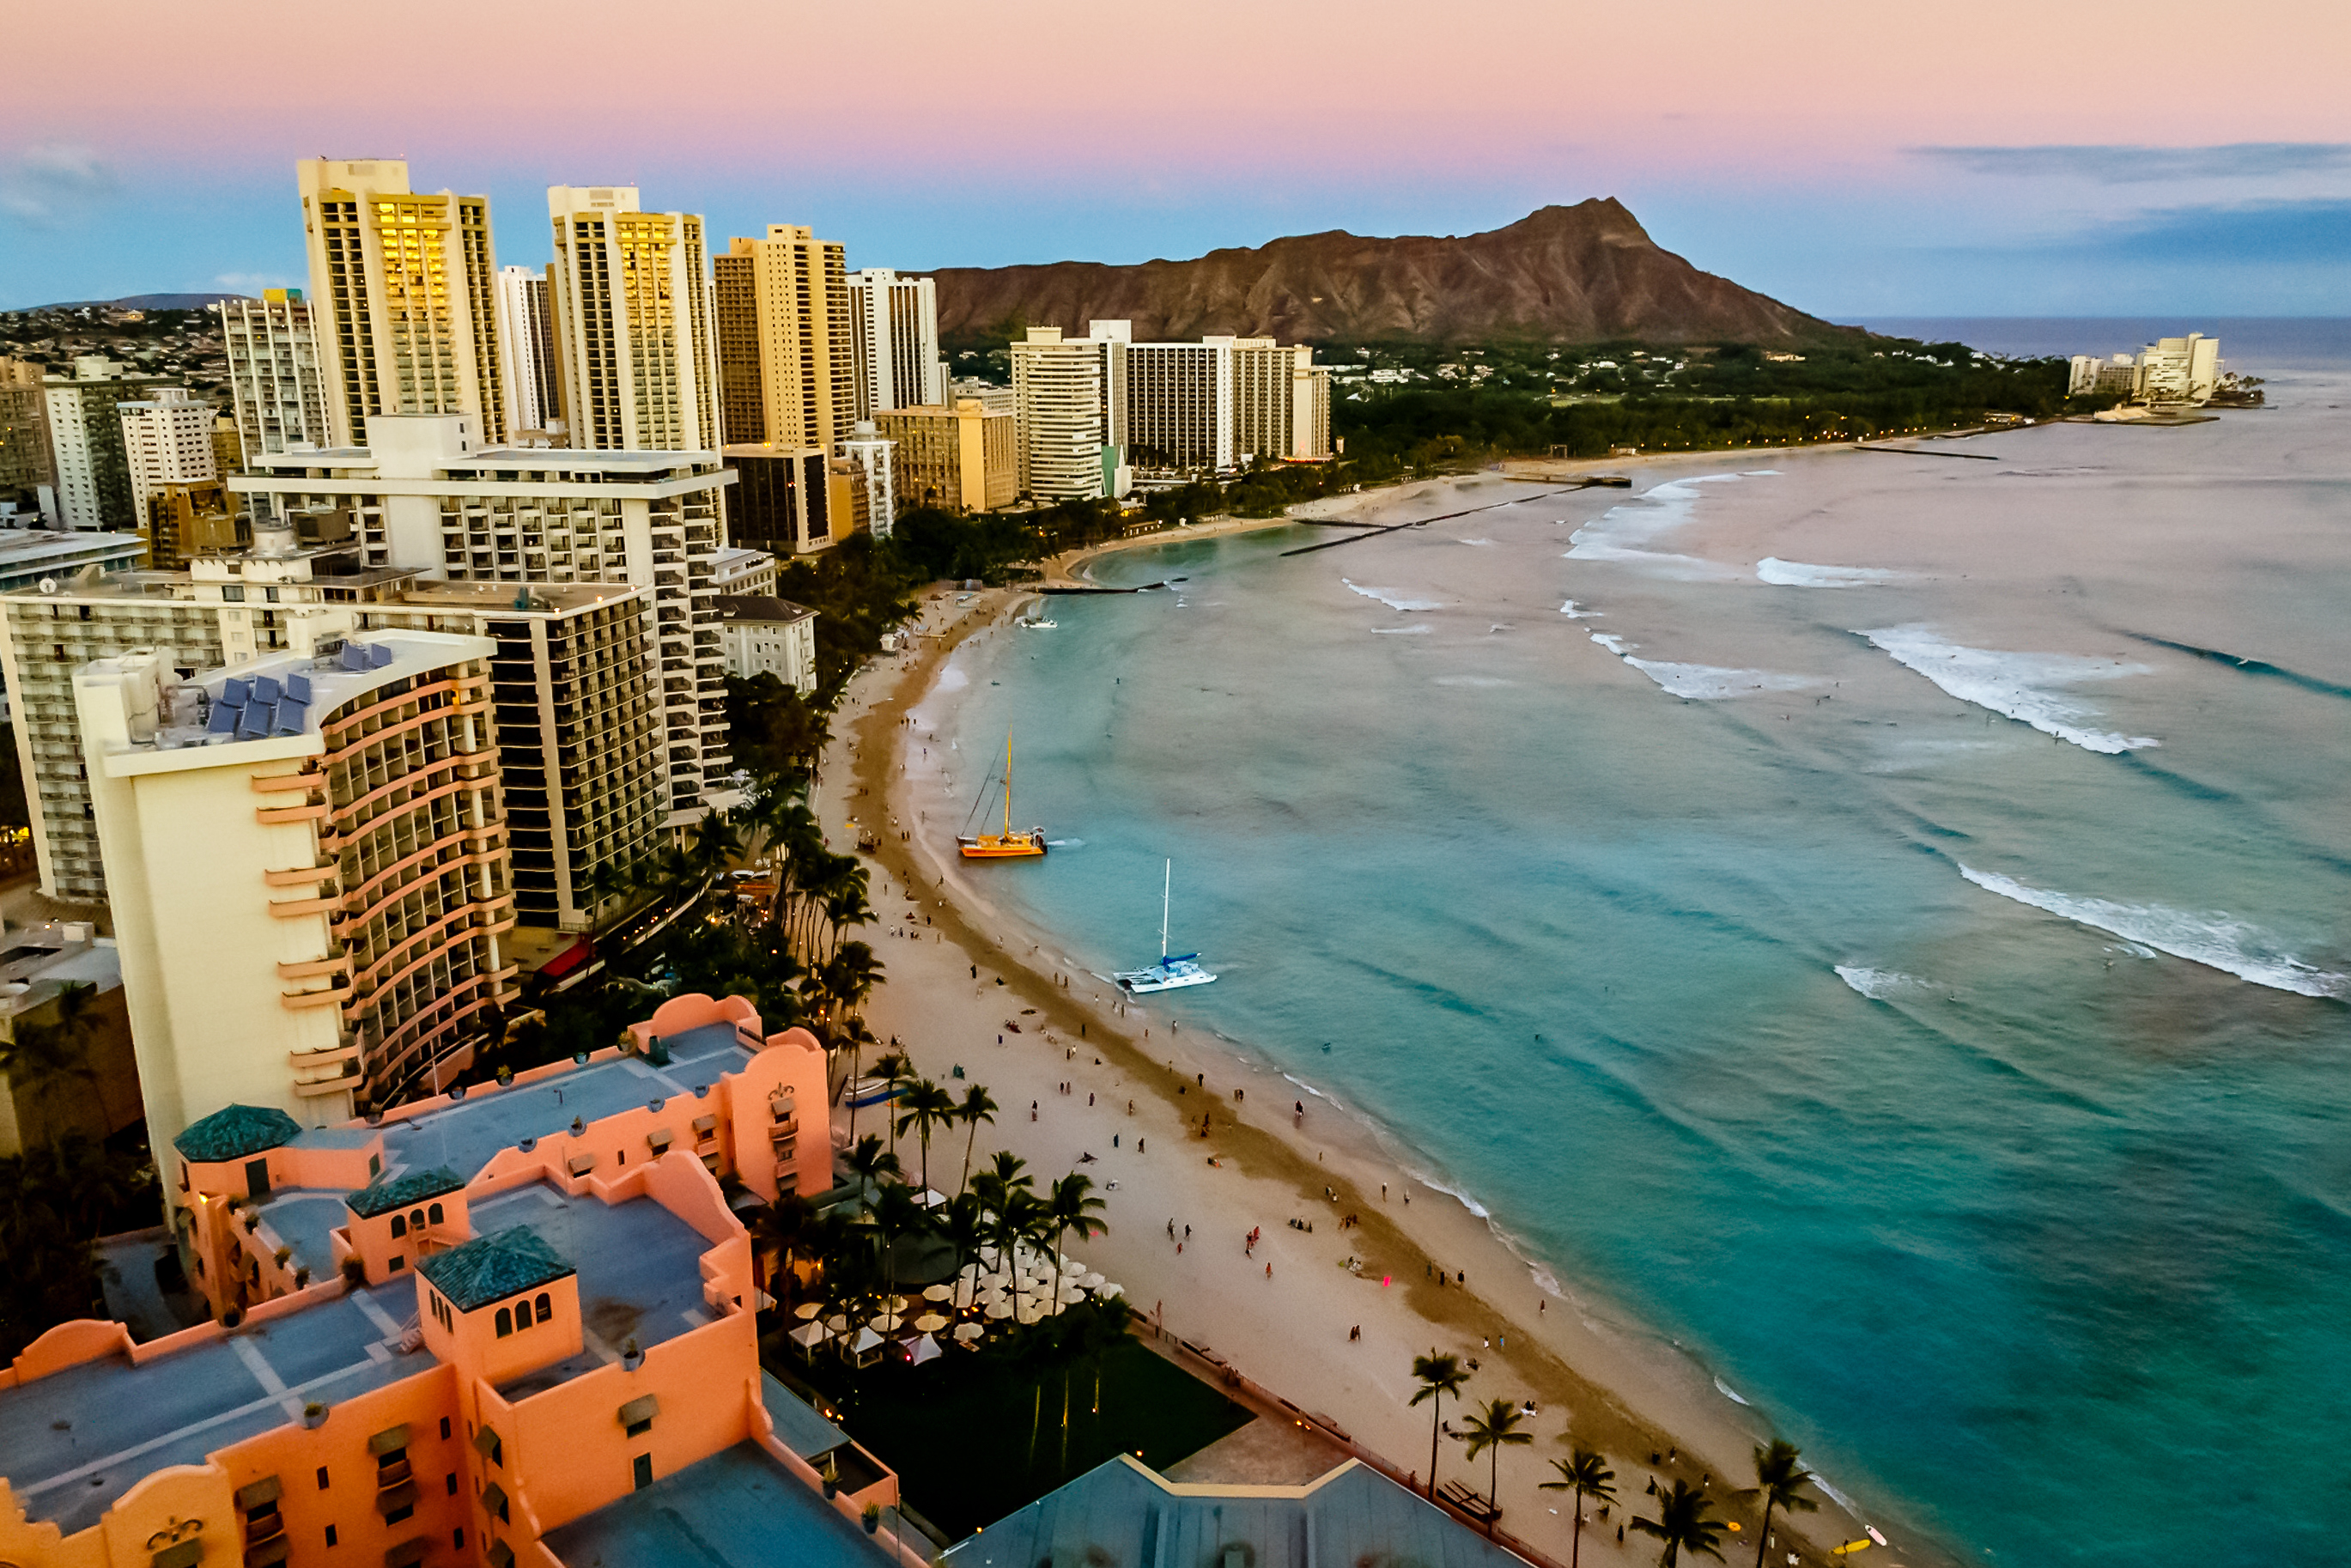 Waikiki Beach is one of many Honolulu destinations to enjoy year-round nice weather. 